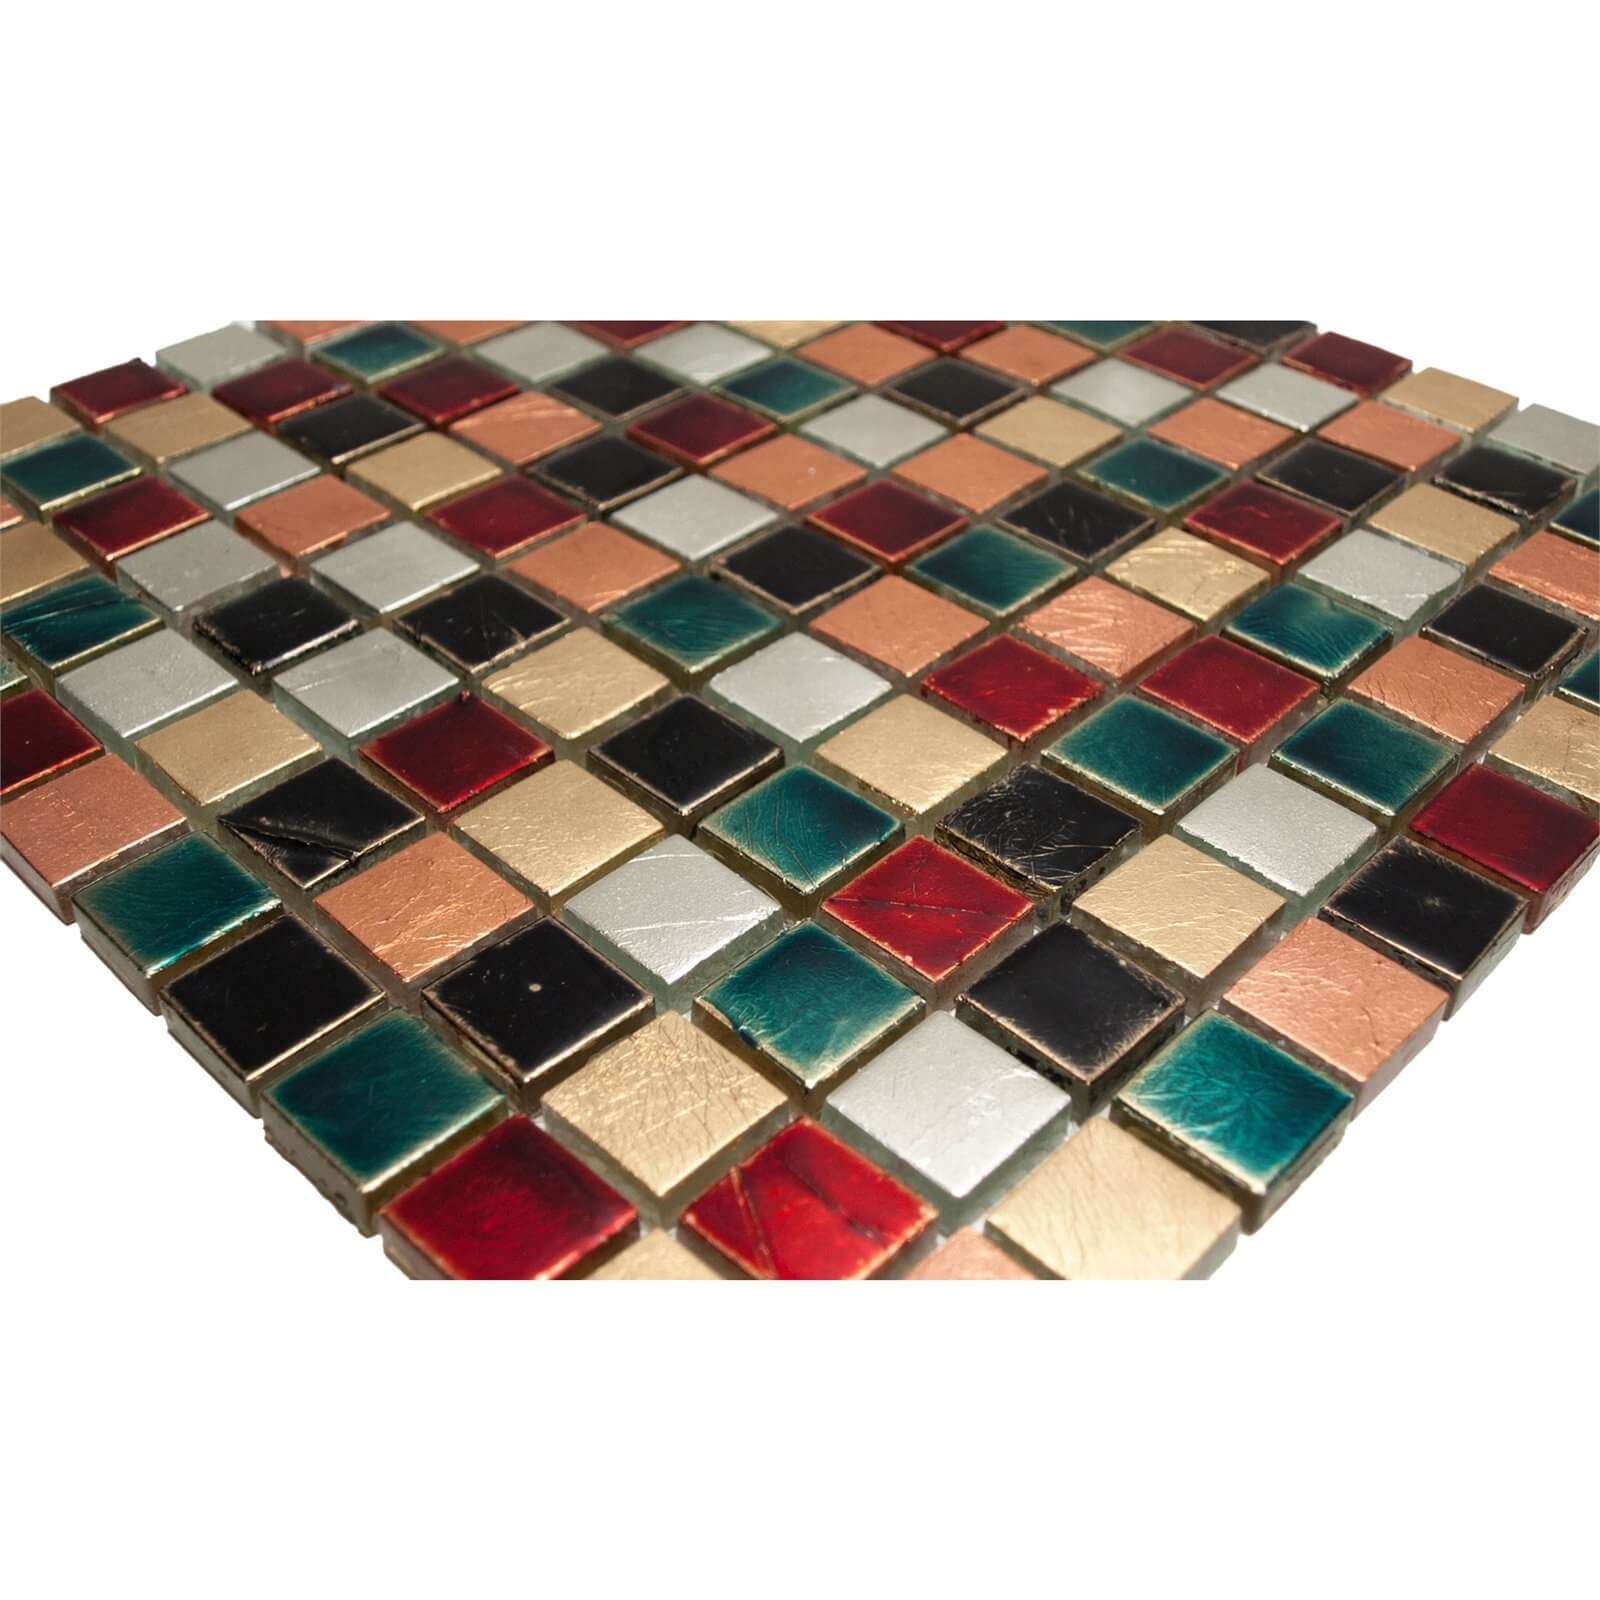 Homelux Marrakech Mosaic Tile